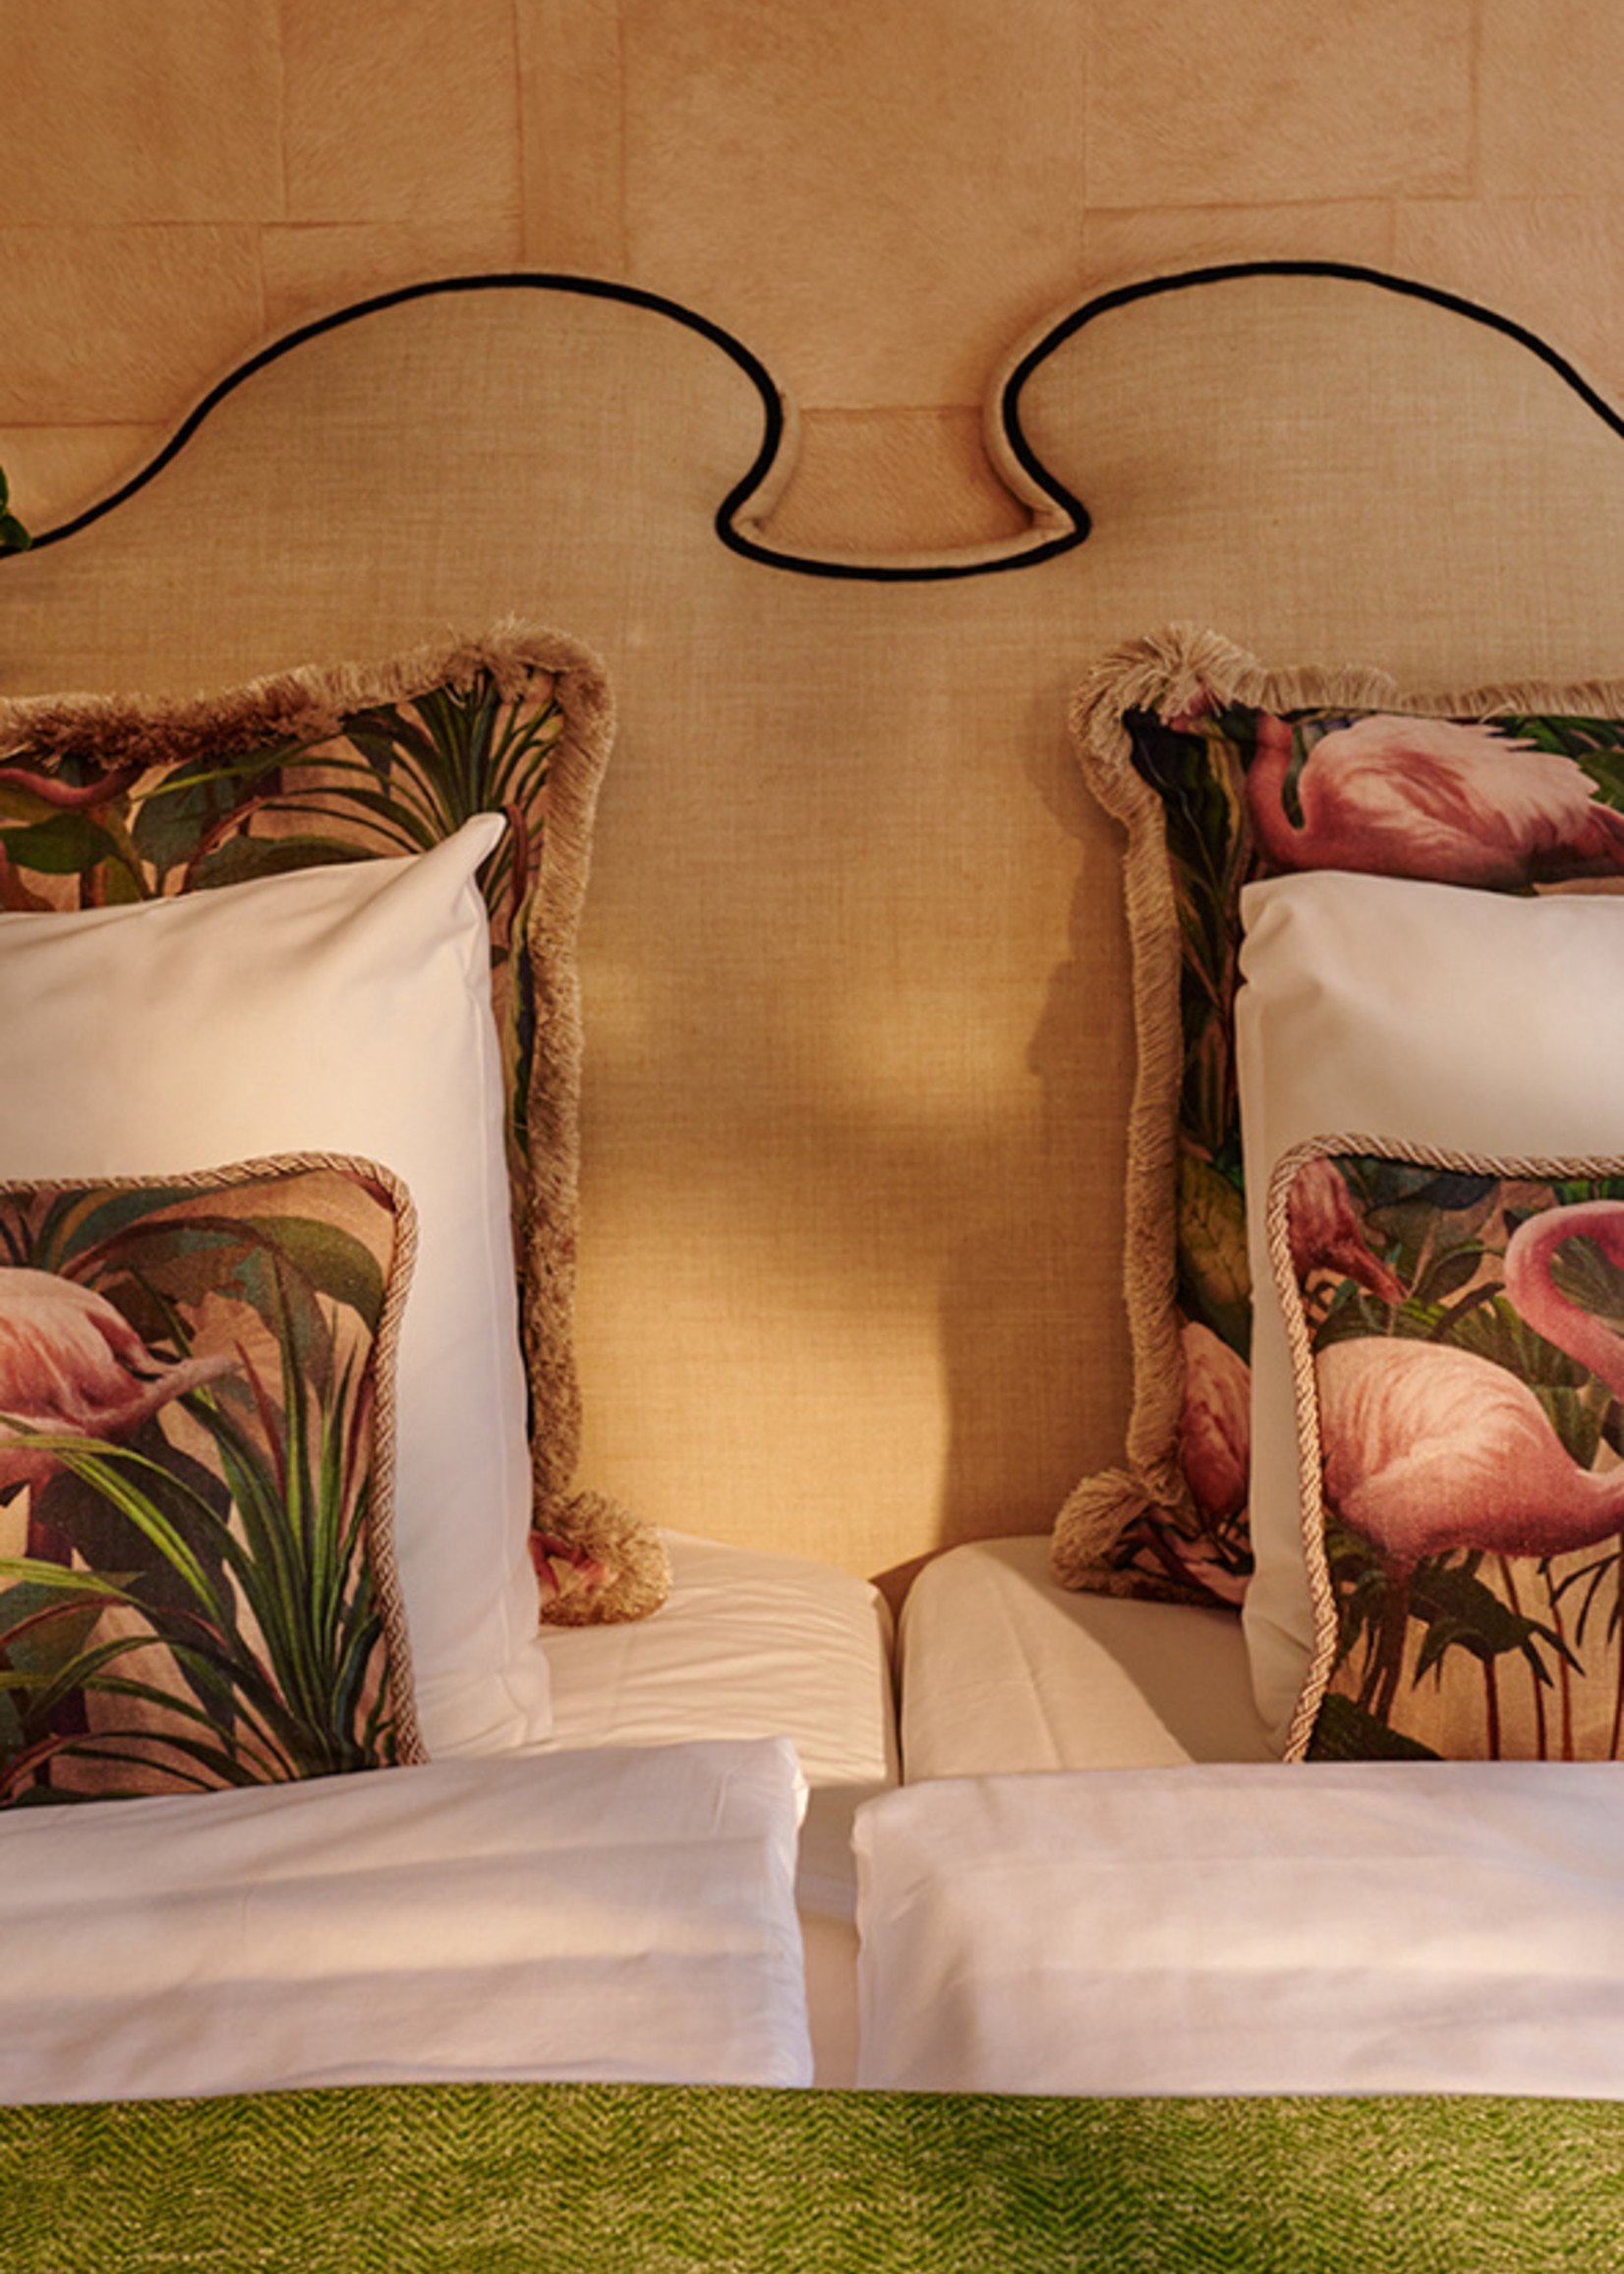 Esther's Flamingo Room's pillows, gold plush